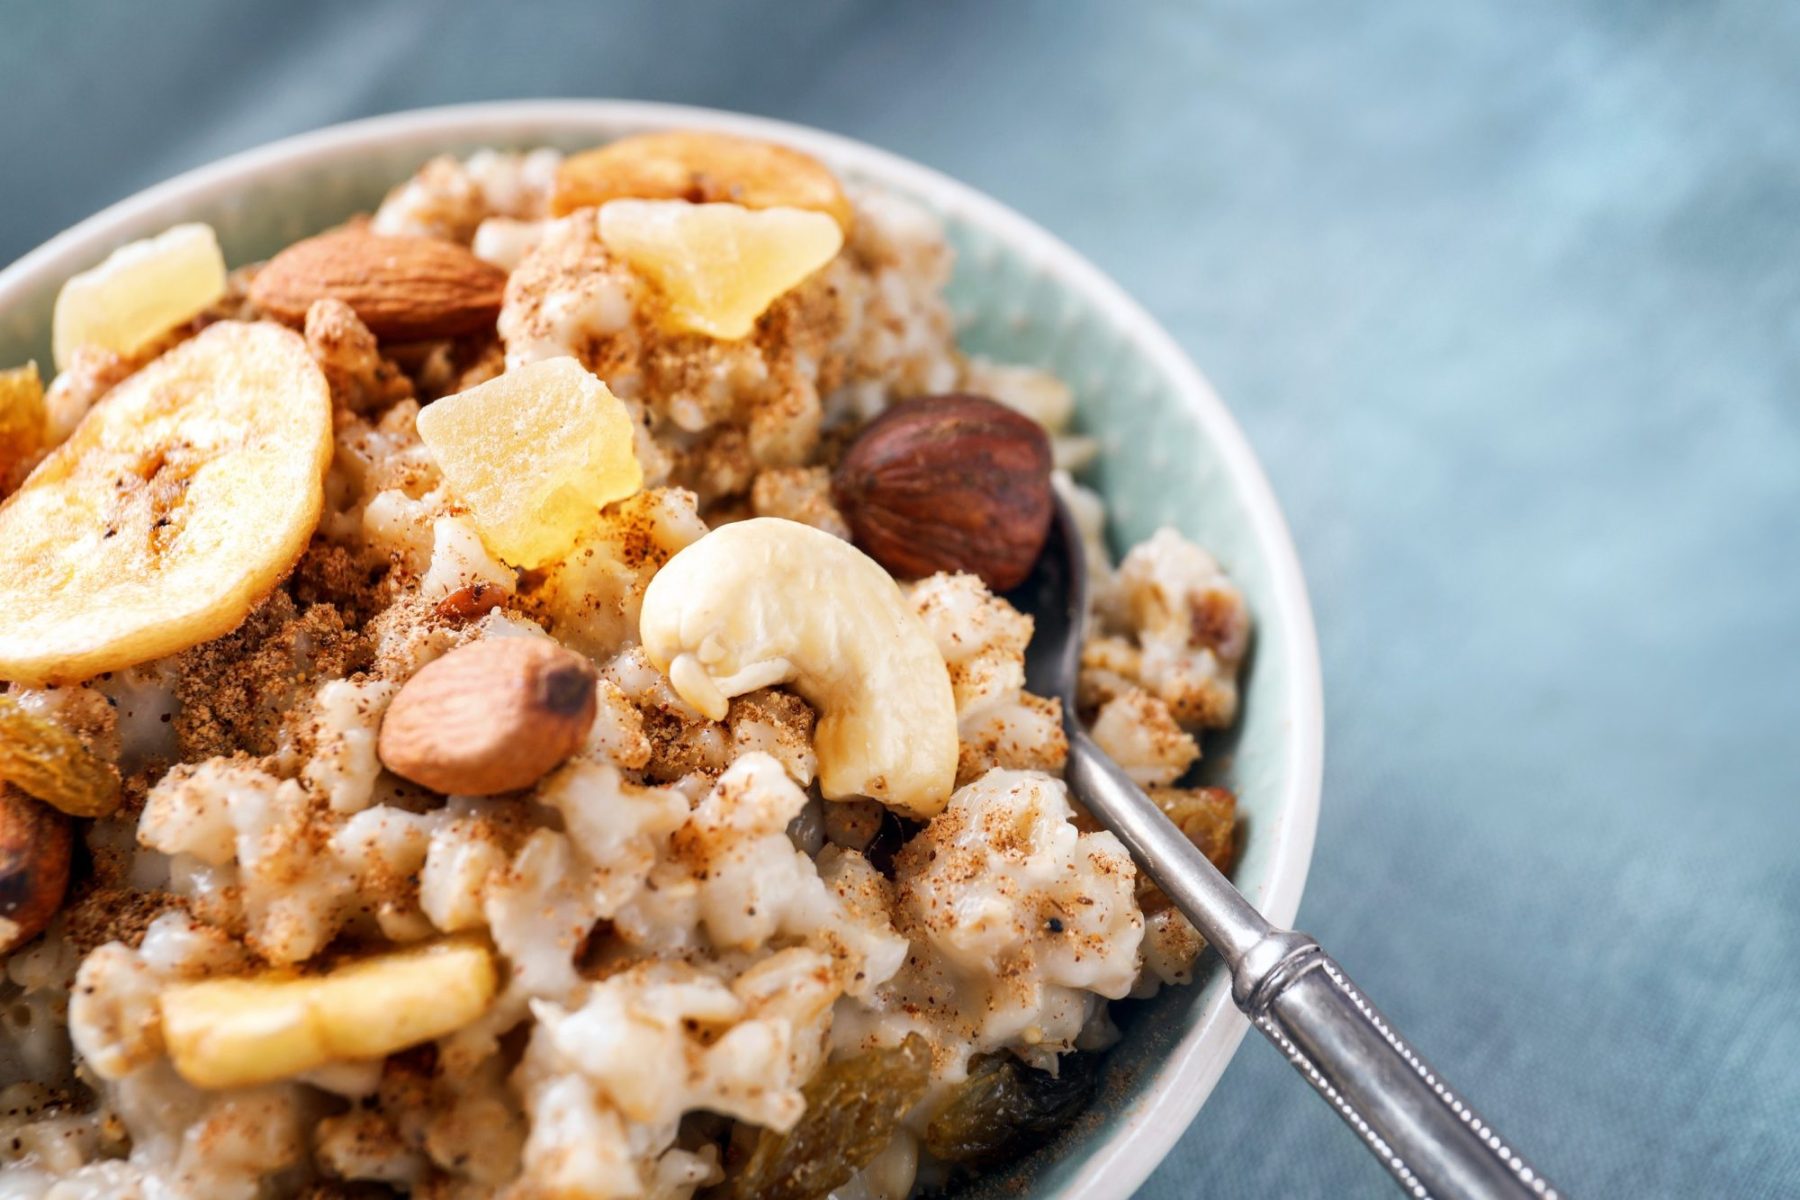 Terre Haute Breakfast Choices | Bloomington Office Snacks | Healthy Oatmeal Options